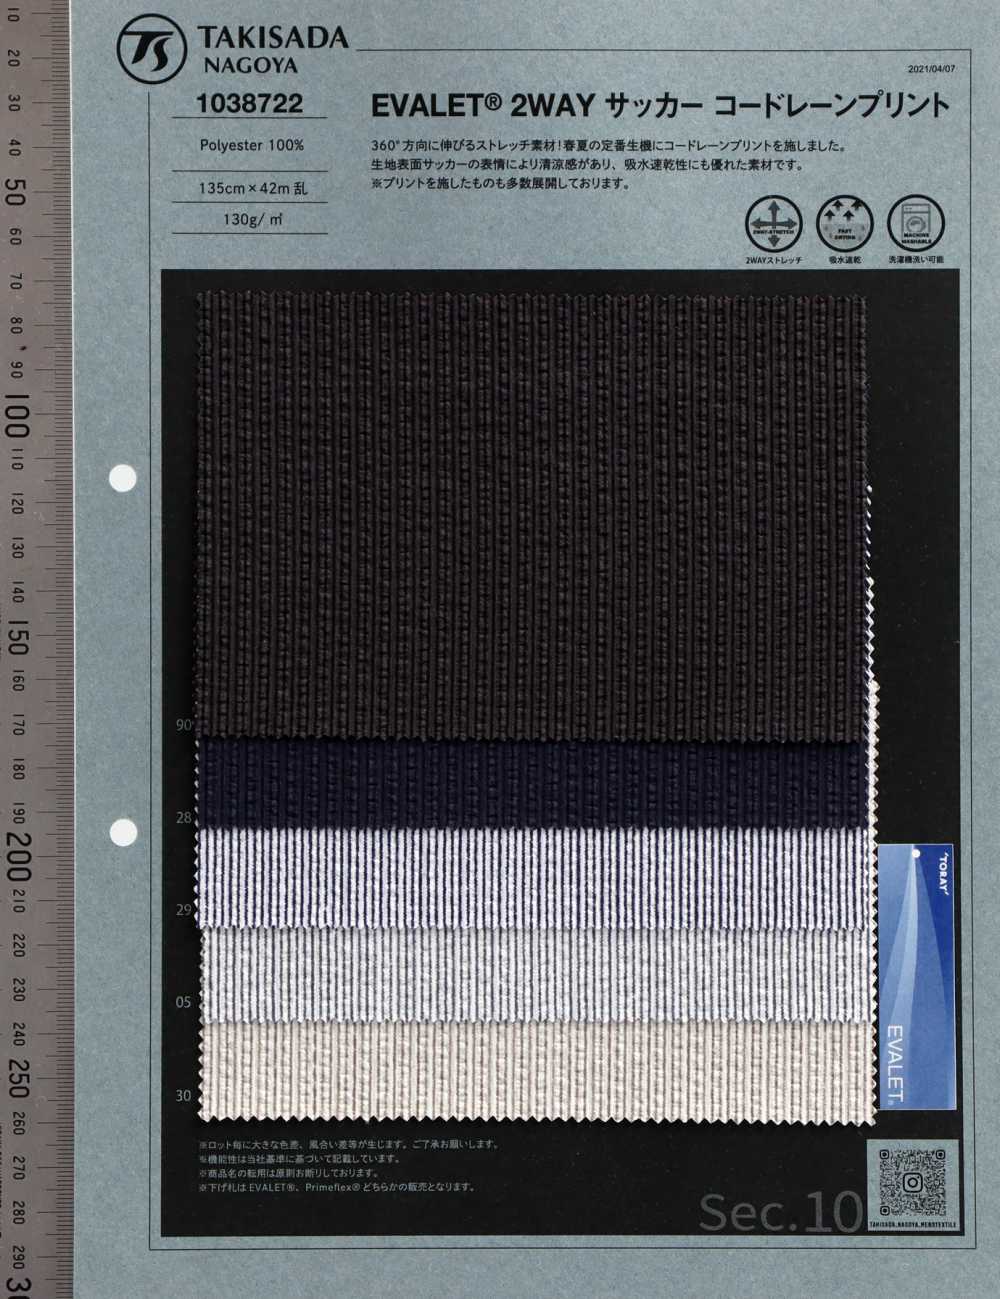 1038722 EVALET® 2WAY Seersucker Stripe Pattern[Textile / Fabric] Takisada Nagoya